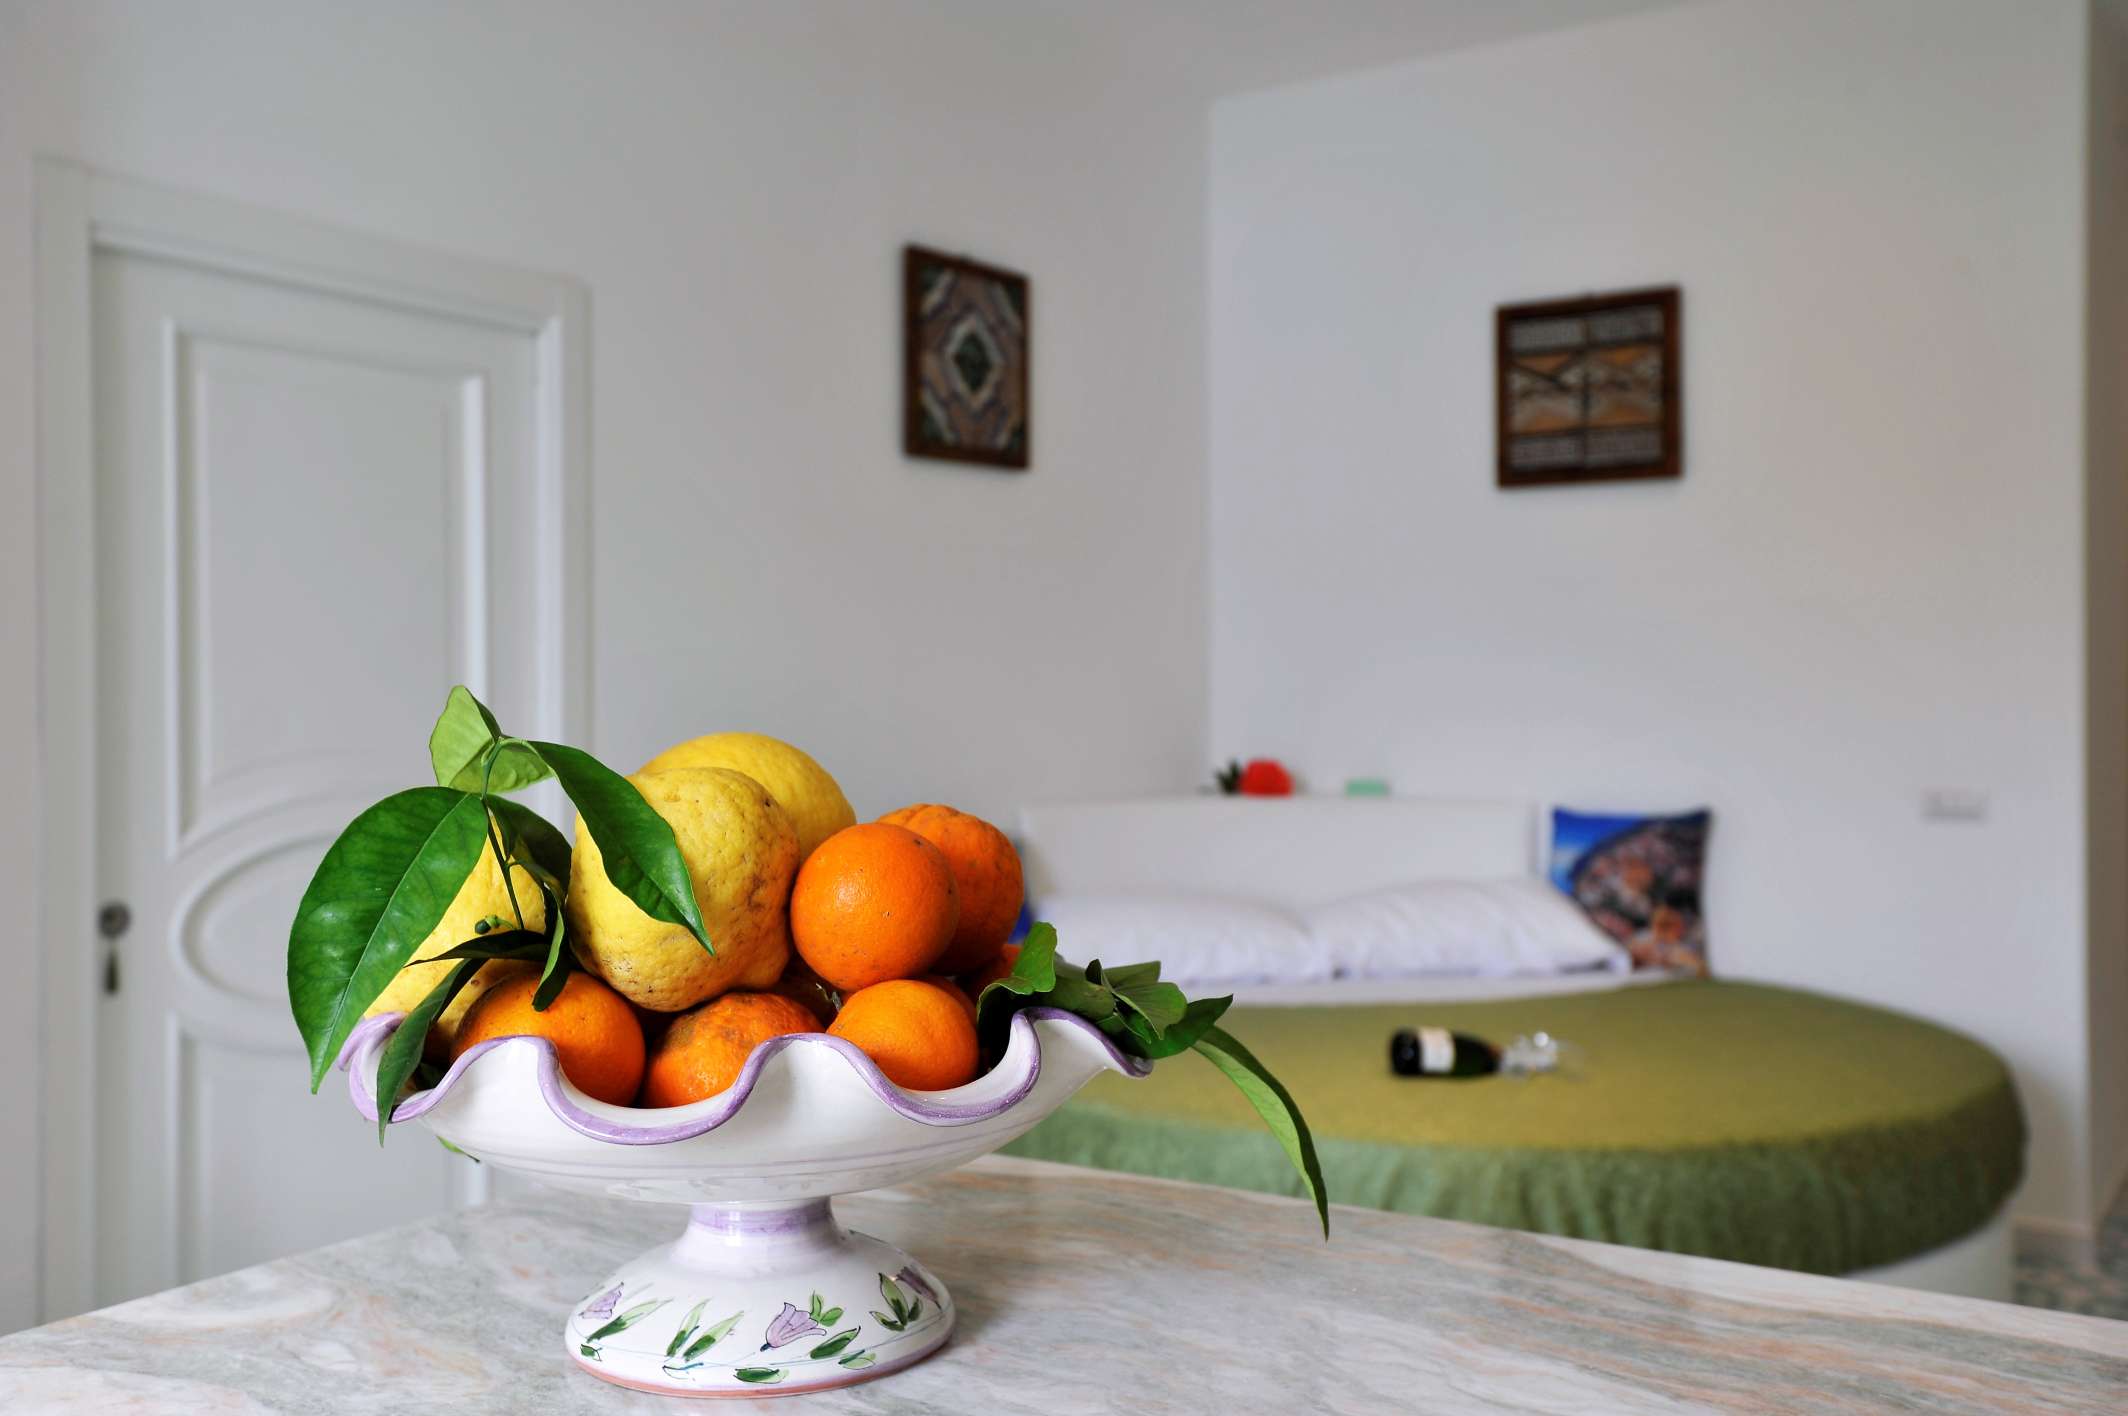 Suite Splendore of the Surriento Suites bed and breakfast in Sorrento